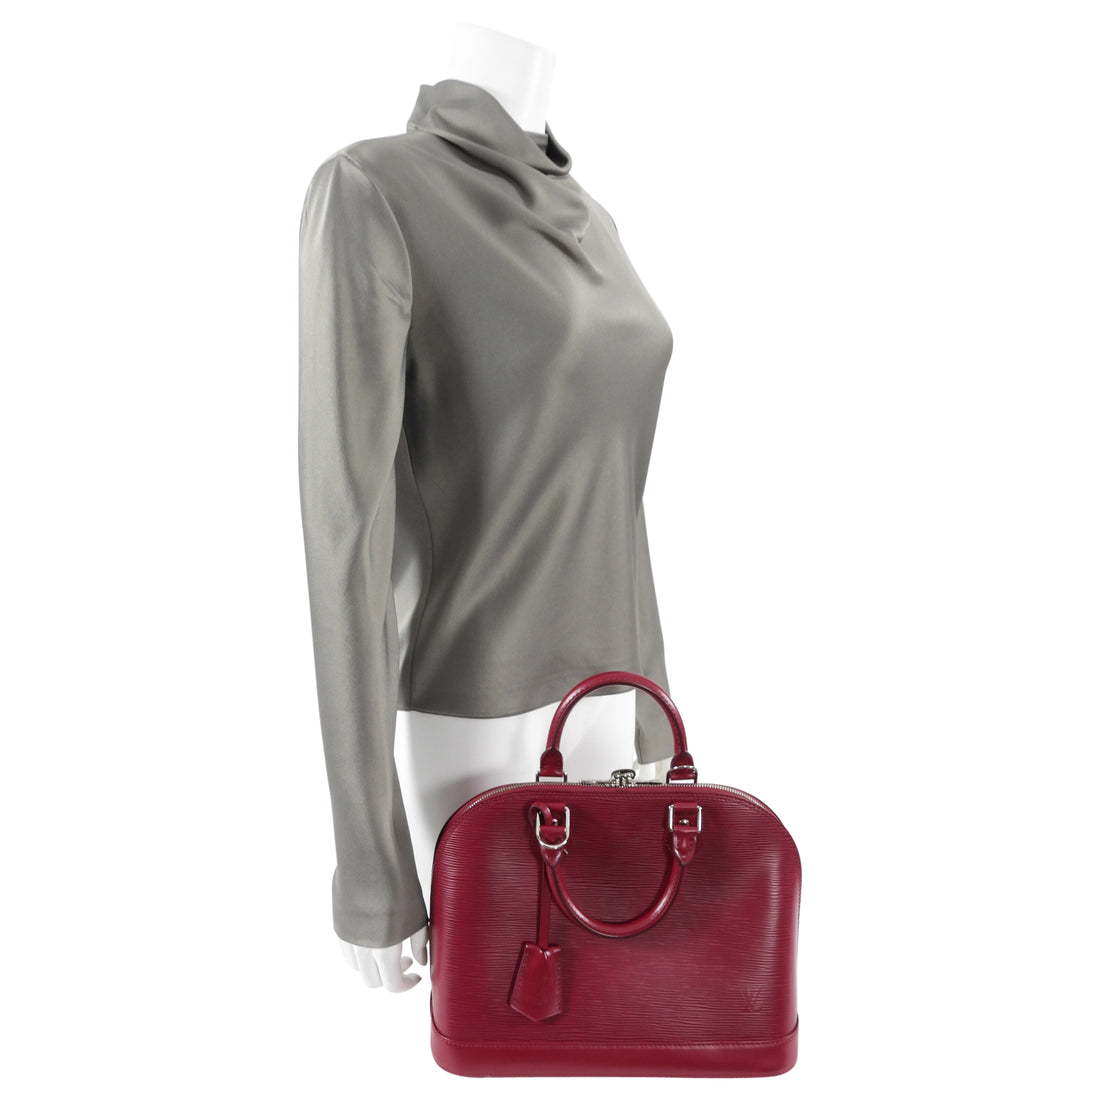 Louis Vuitton Alma BB Epi Leather Bag in Fuchsia - FORD LA FEMME